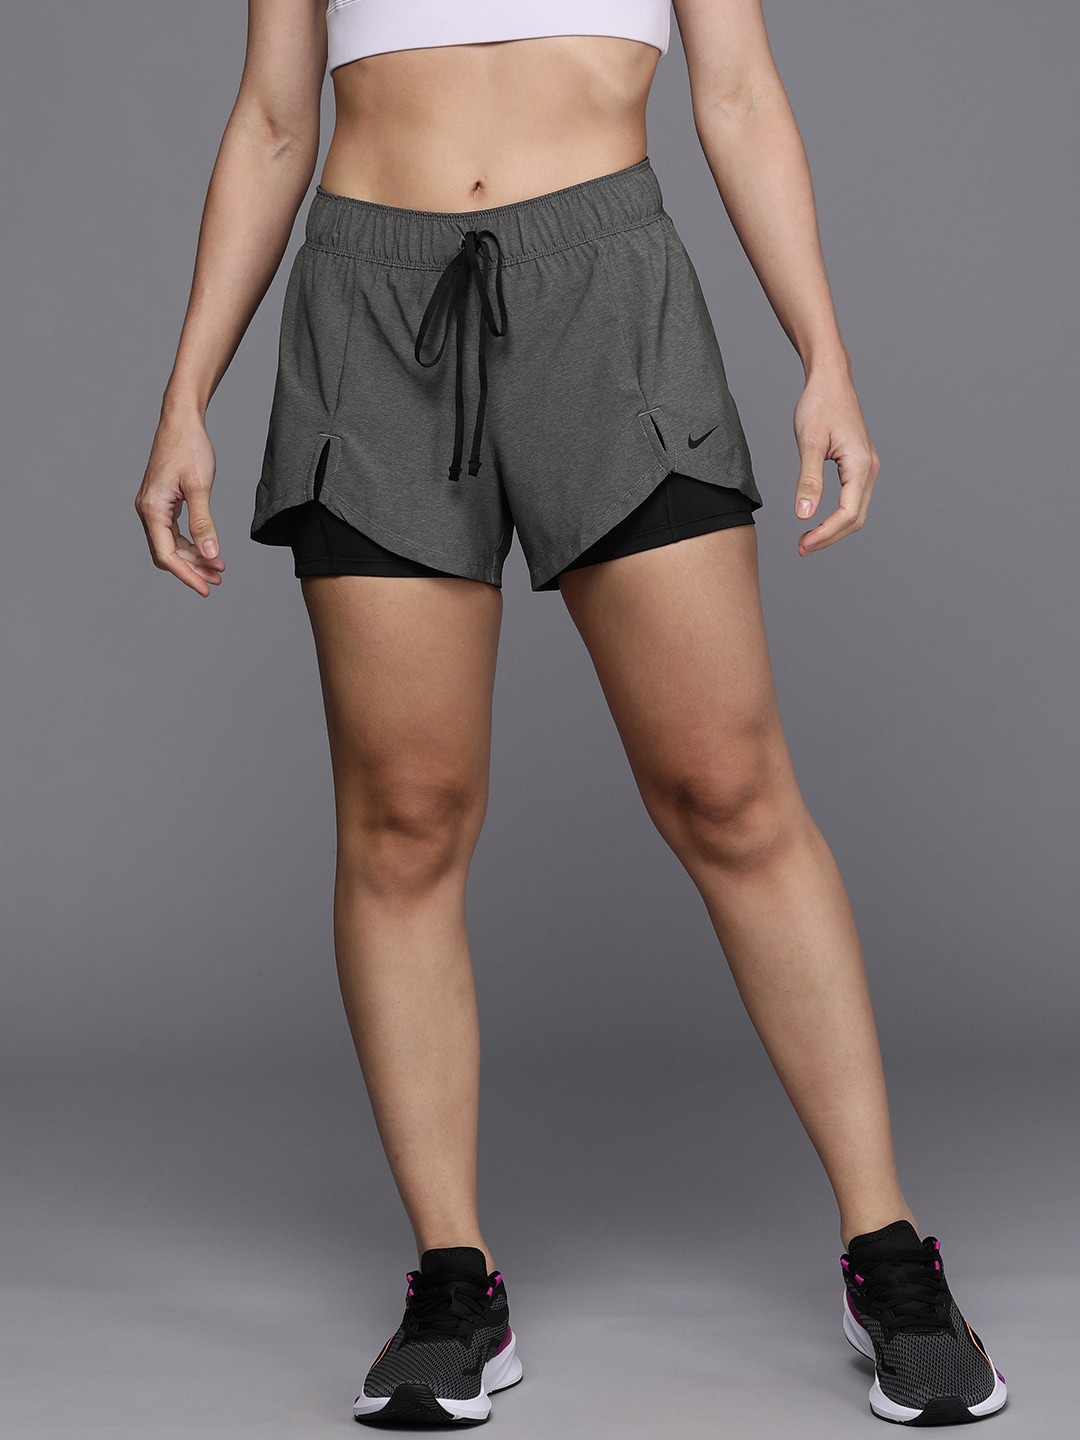 Nike Women Grey Layered Training Shorts Price in India